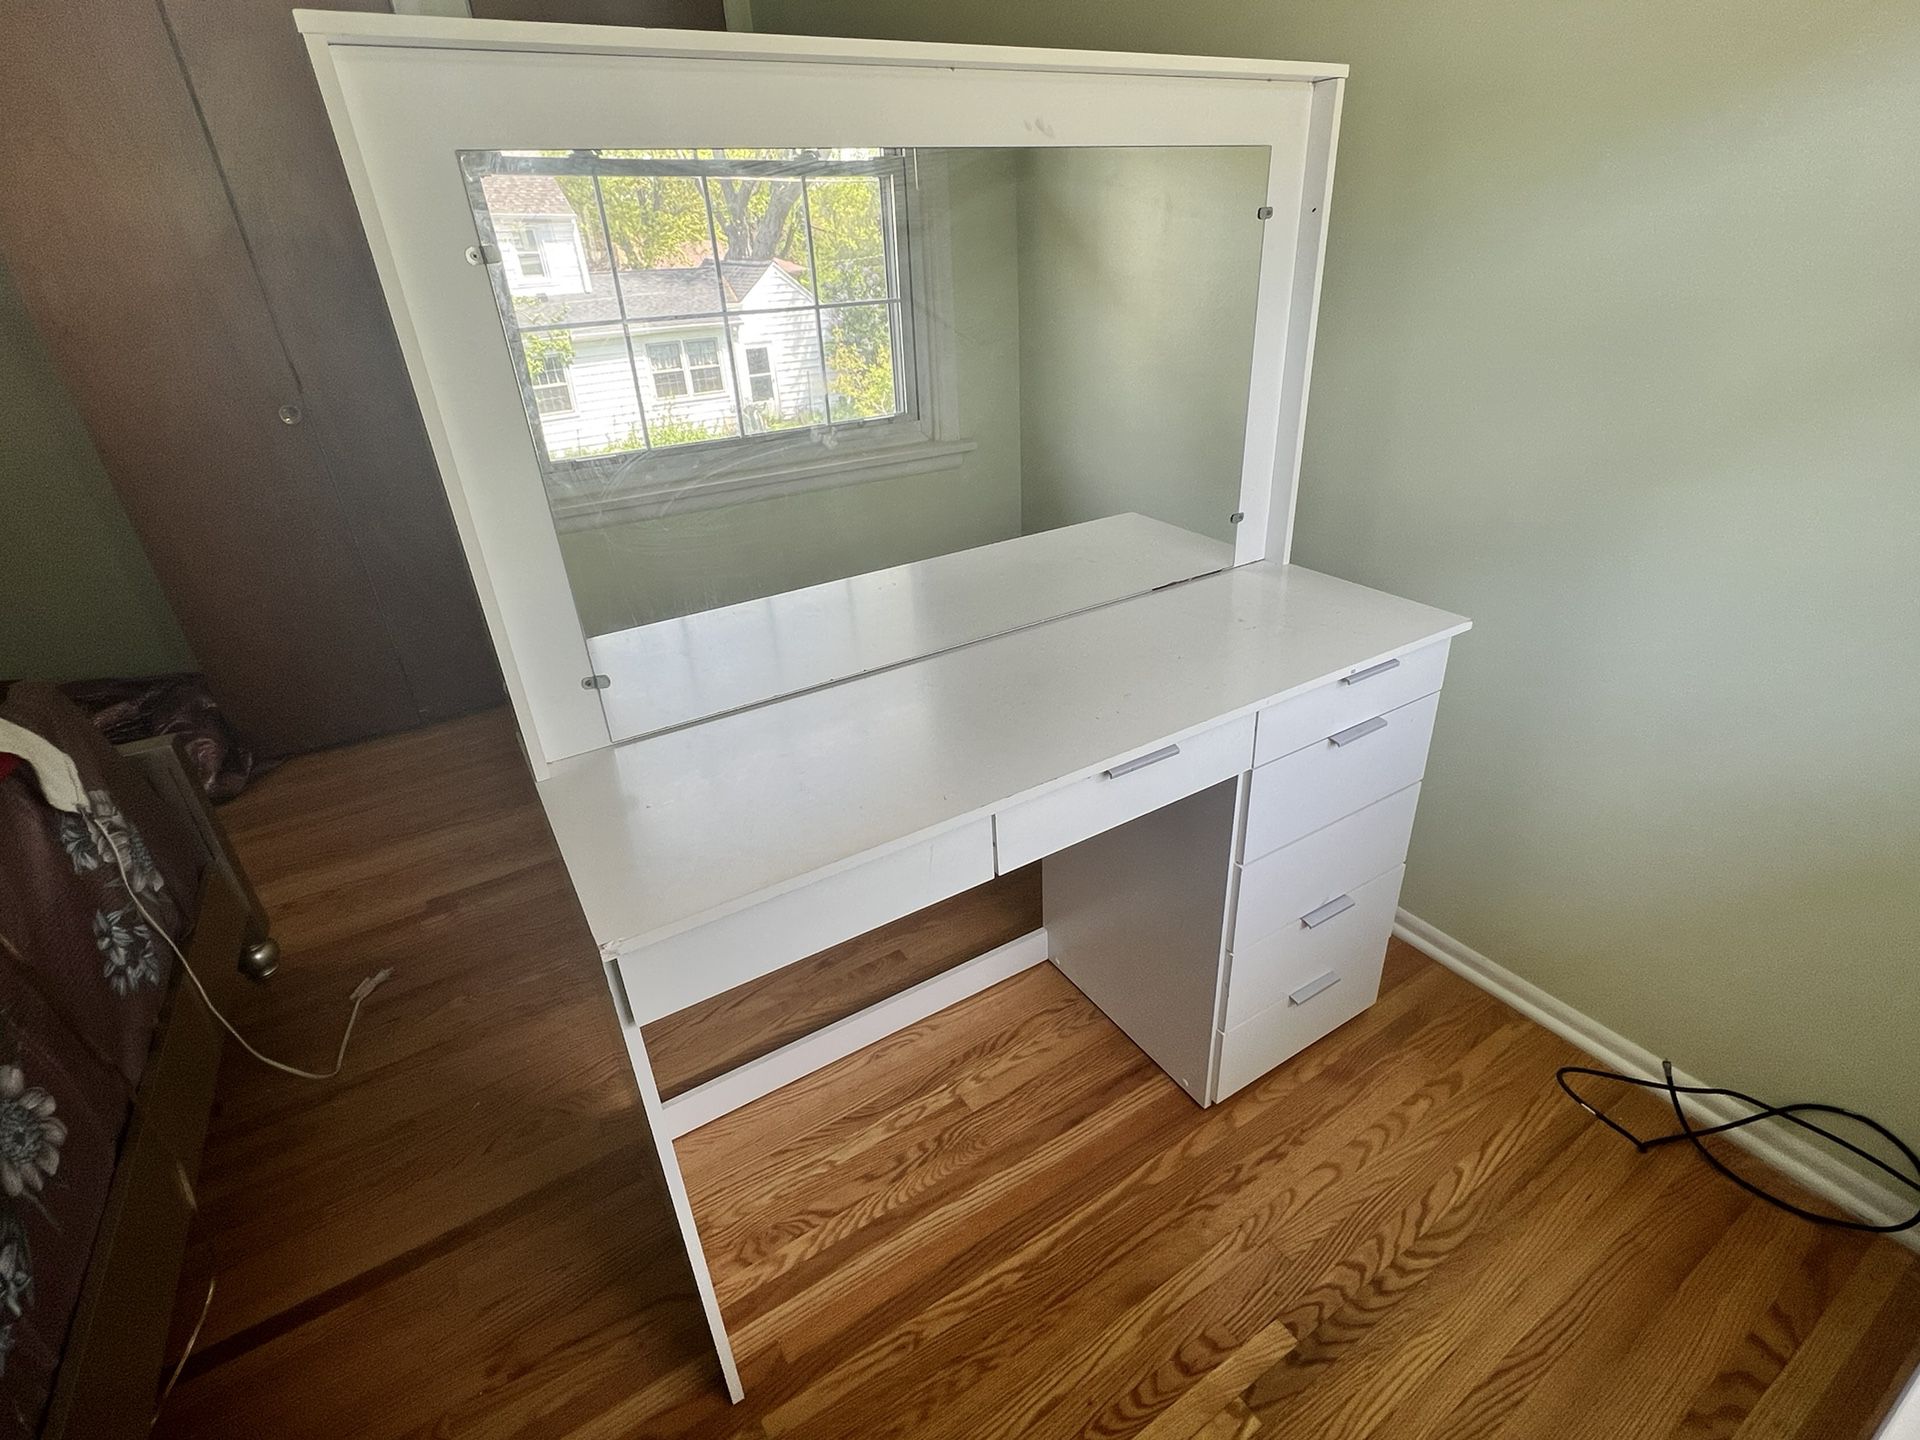 White Mirror/desk 